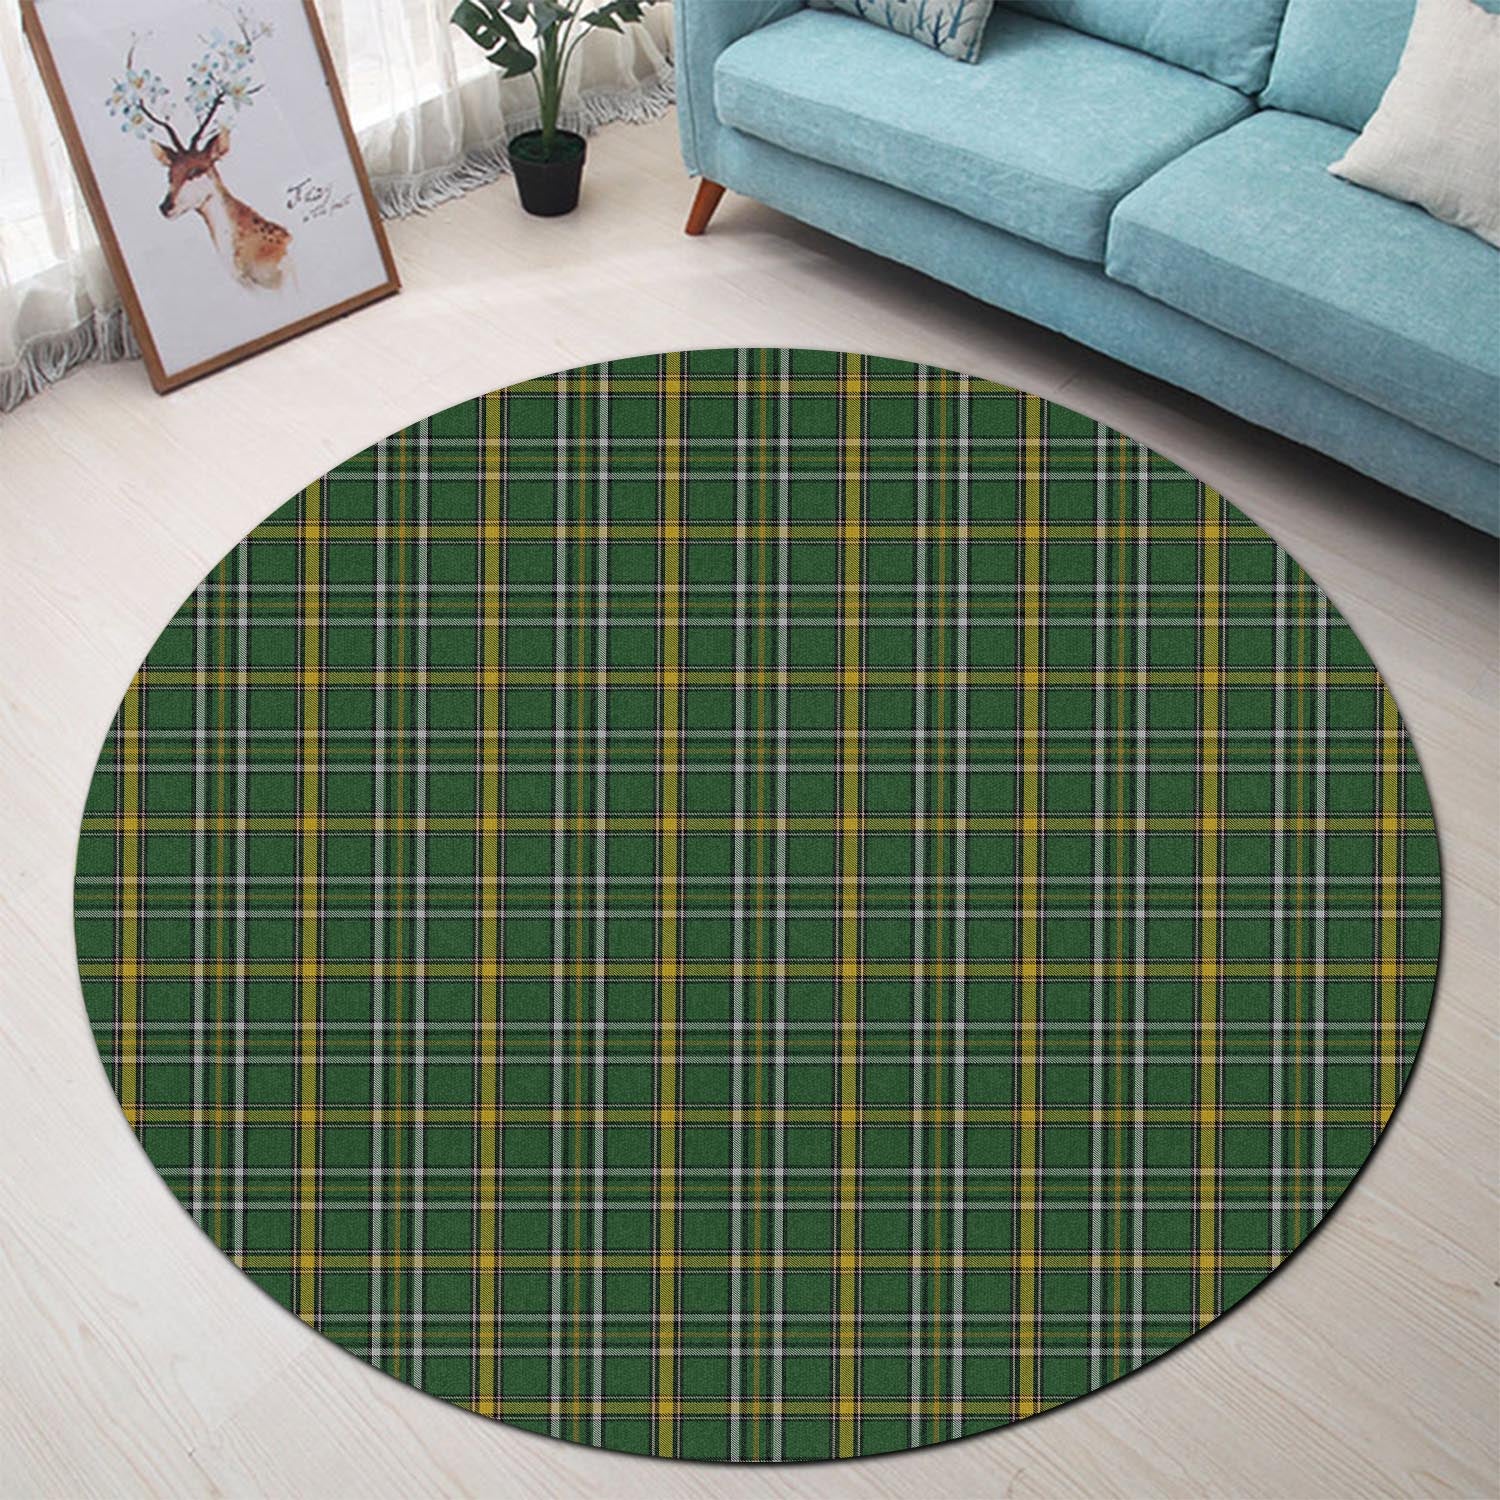 offaly-county-ireland-tartan-round-rug